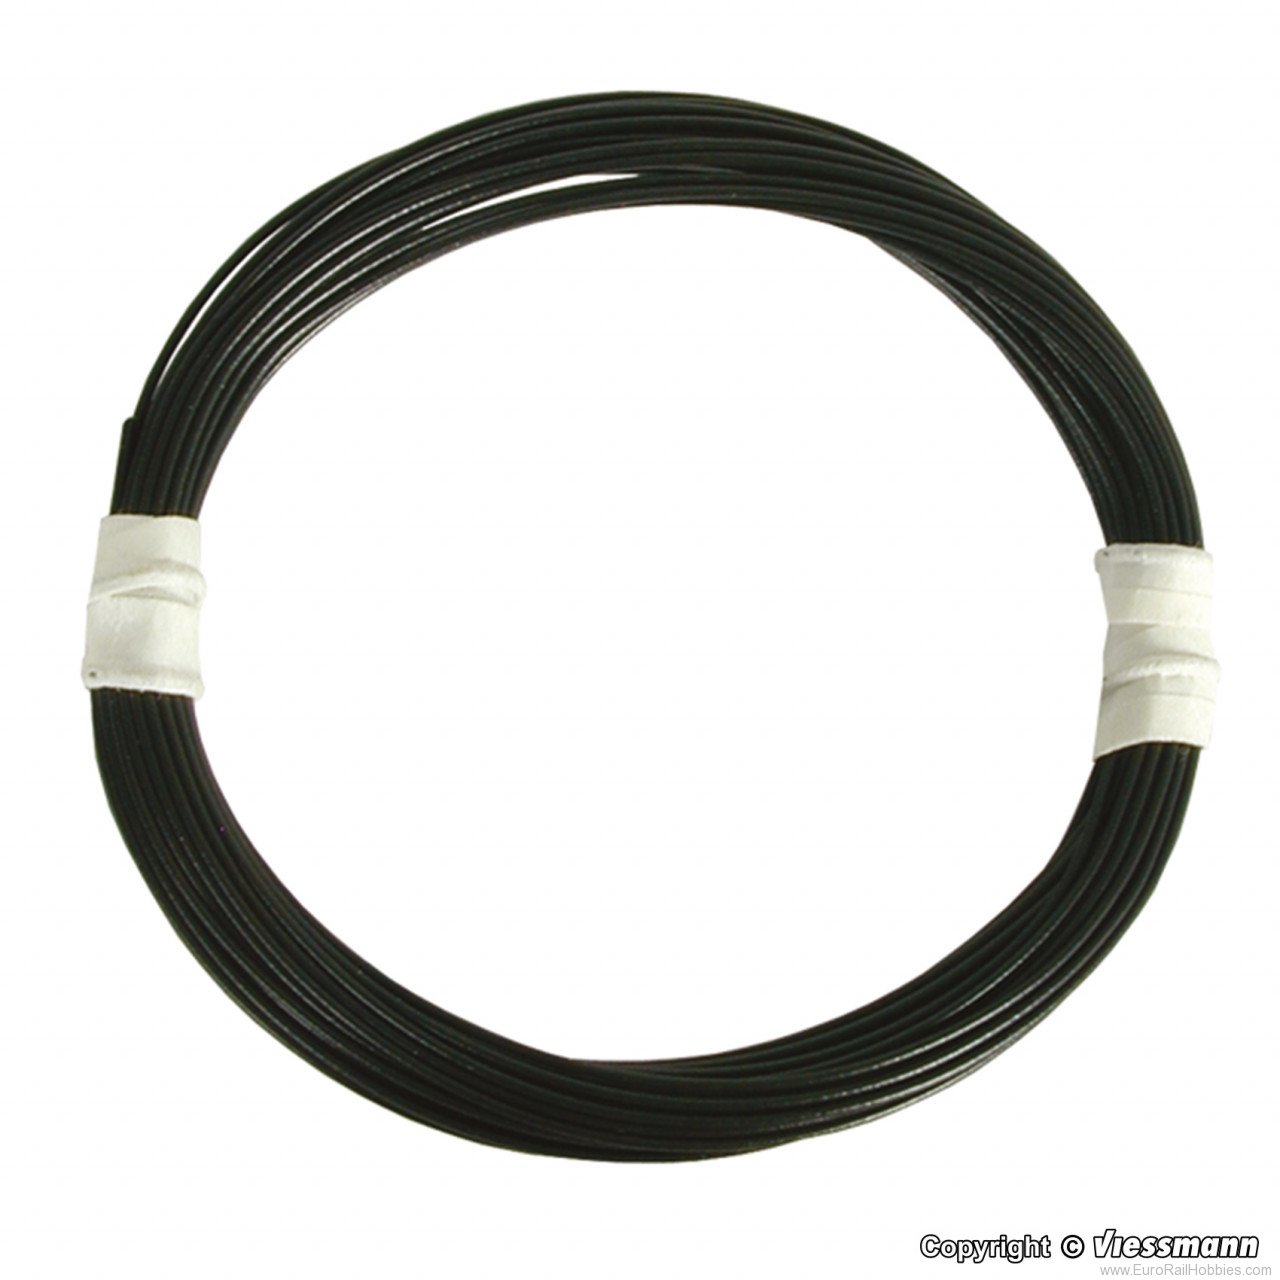 Viessmann 6890 Super thin special wire, 0,03 mm dia., black,